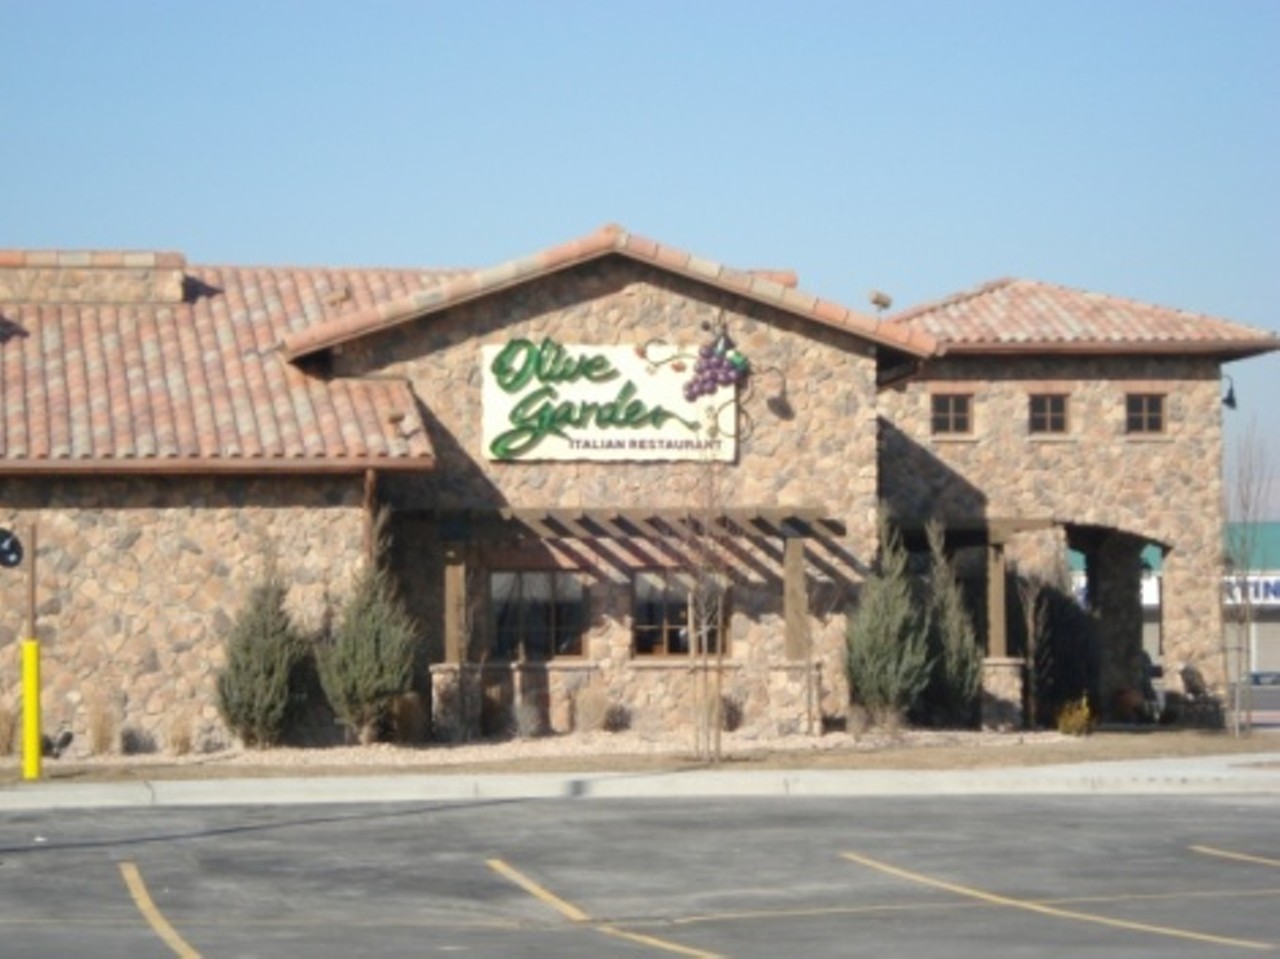 Olive Garden Salt Lake City Closed Lake Image Review